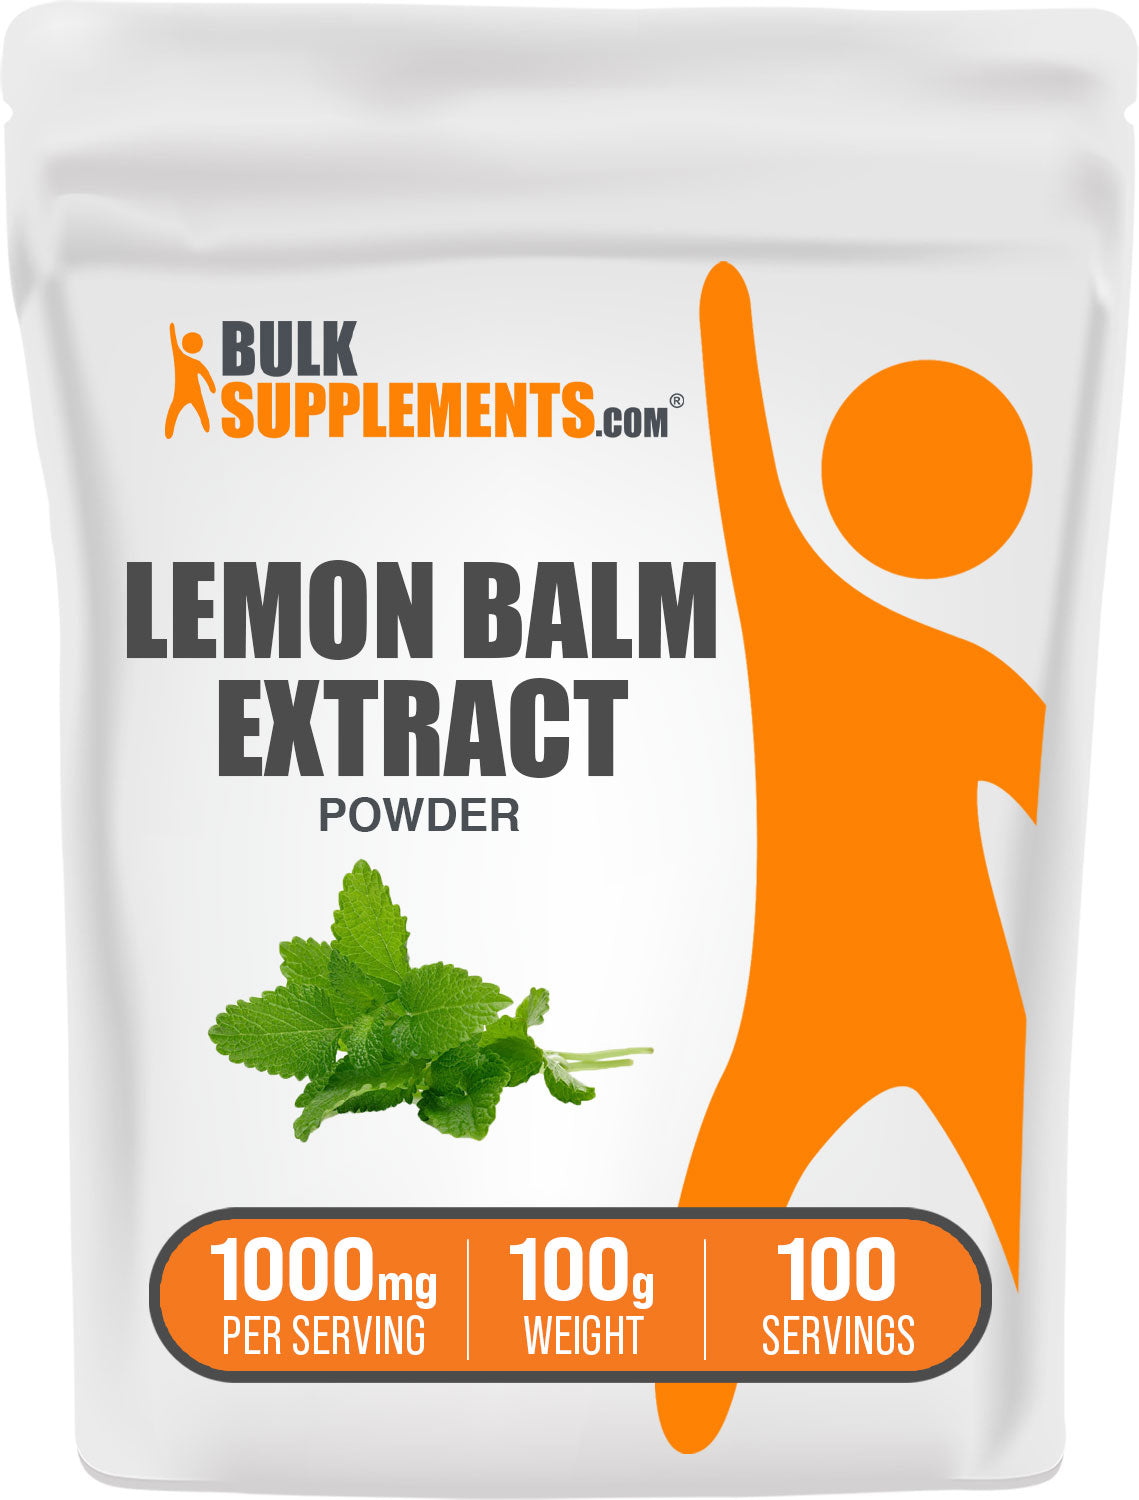 Lemon Balm Extract 100g